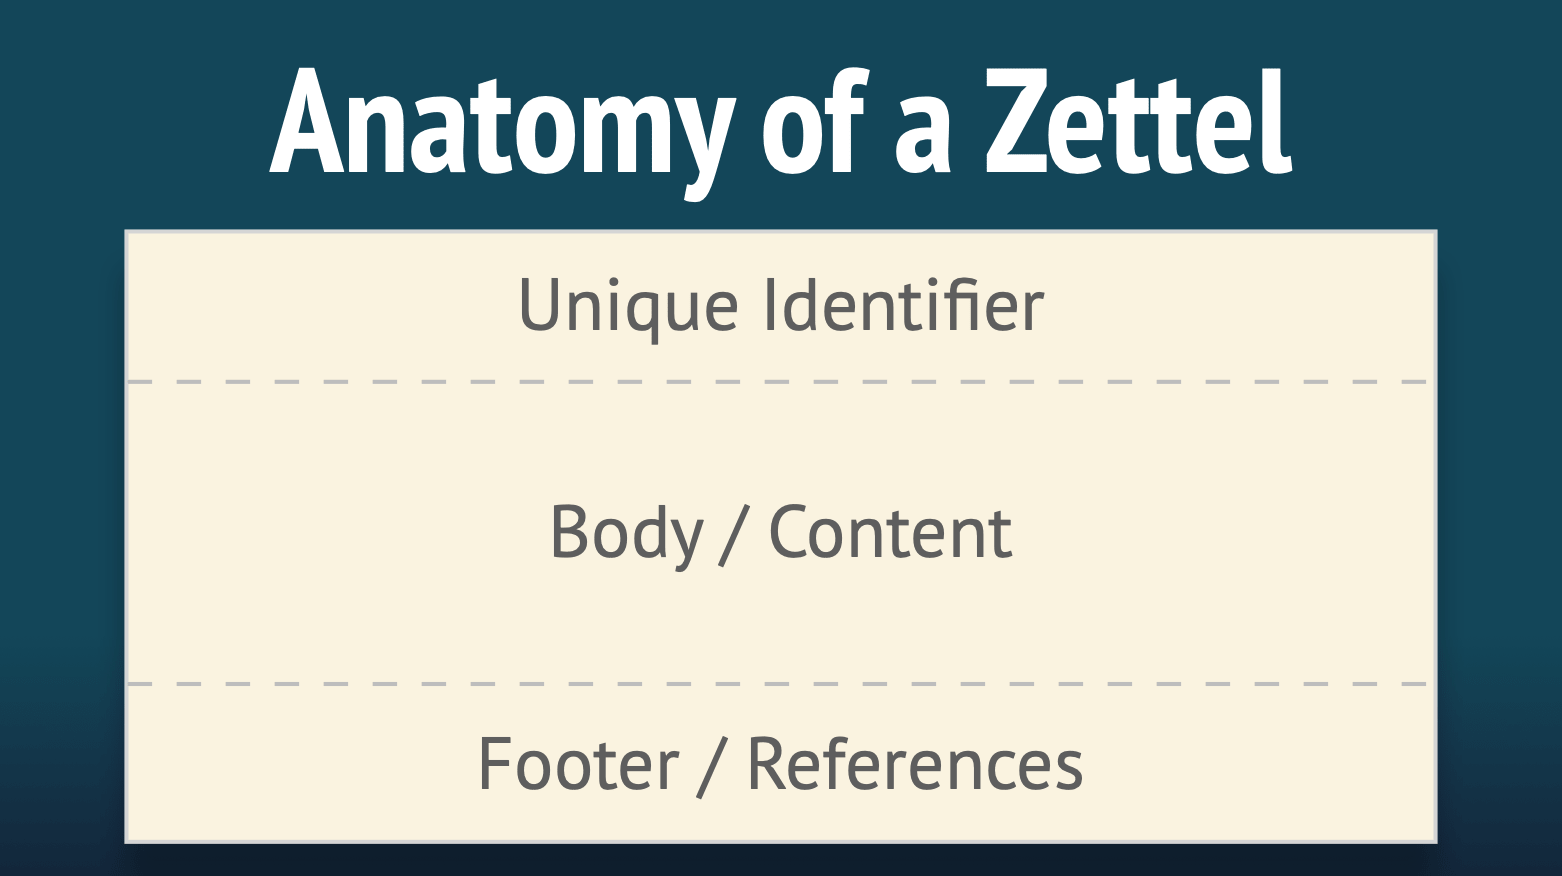 Anatomia de um Zettel